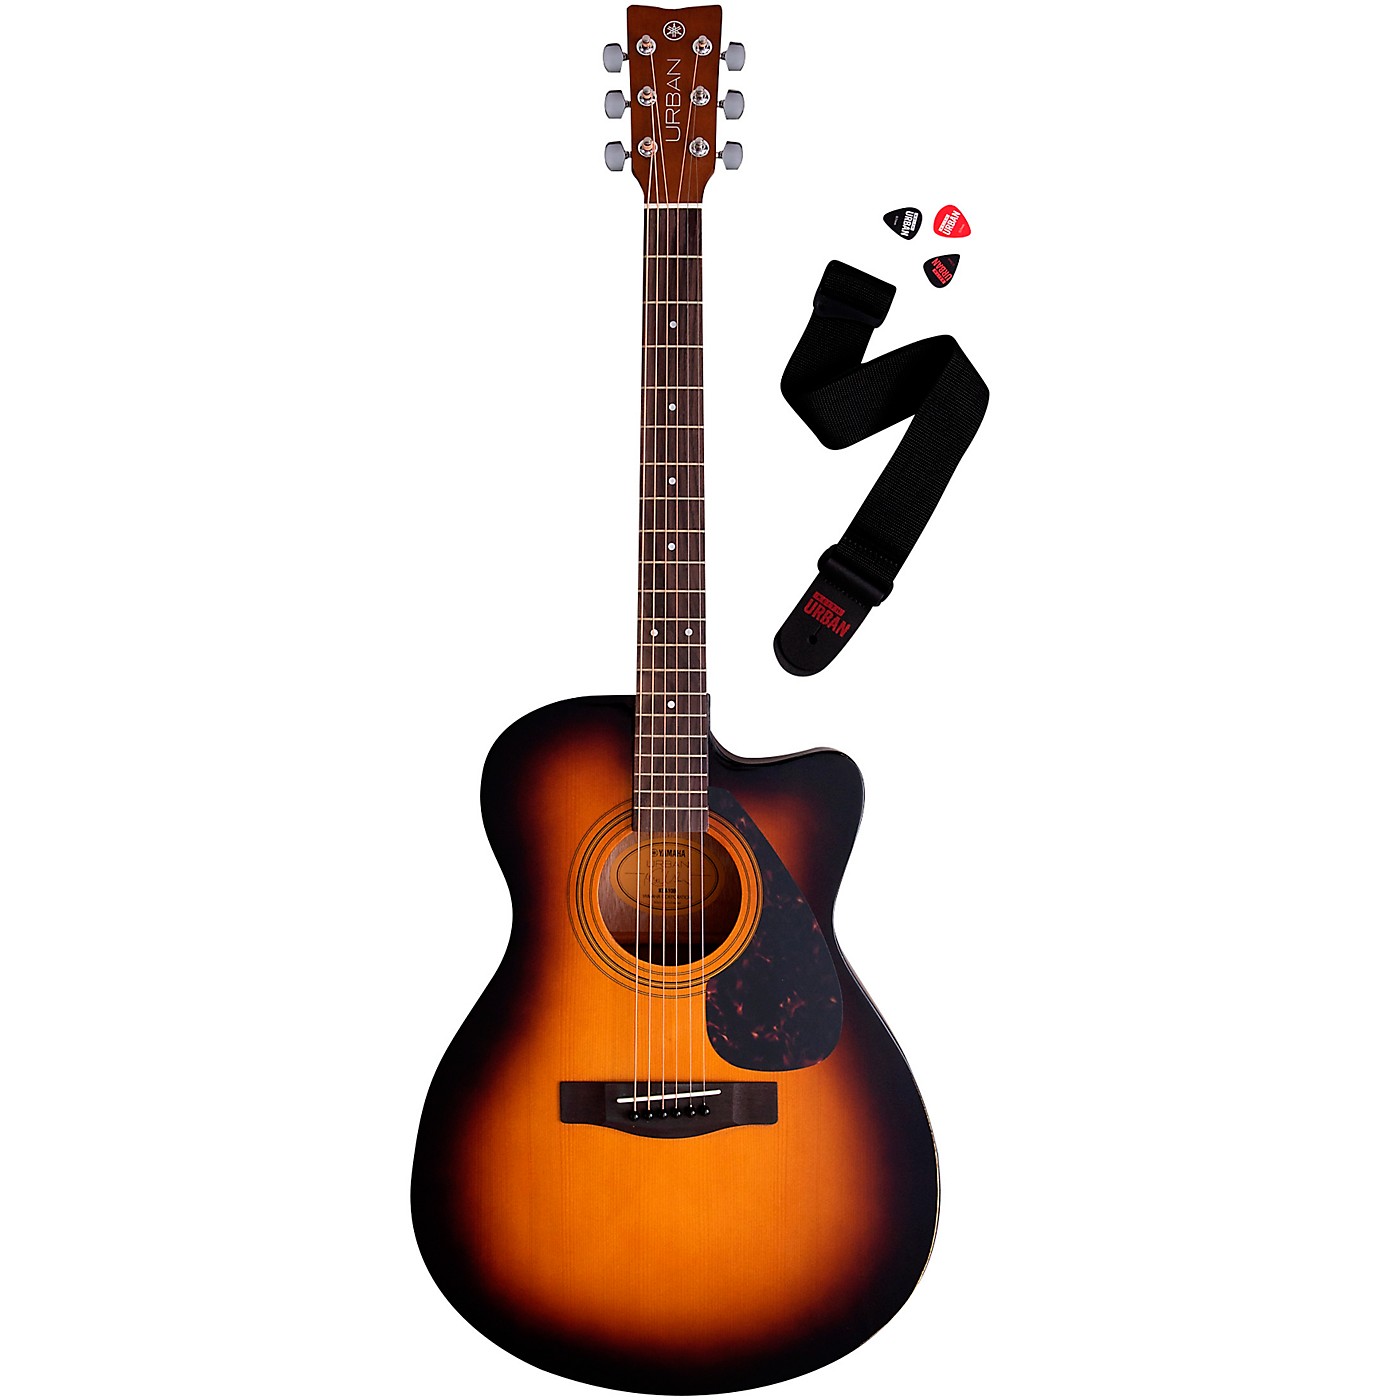 Yamaha Keith Urban Cutaway Acoustic Guitar Pack thumbnail